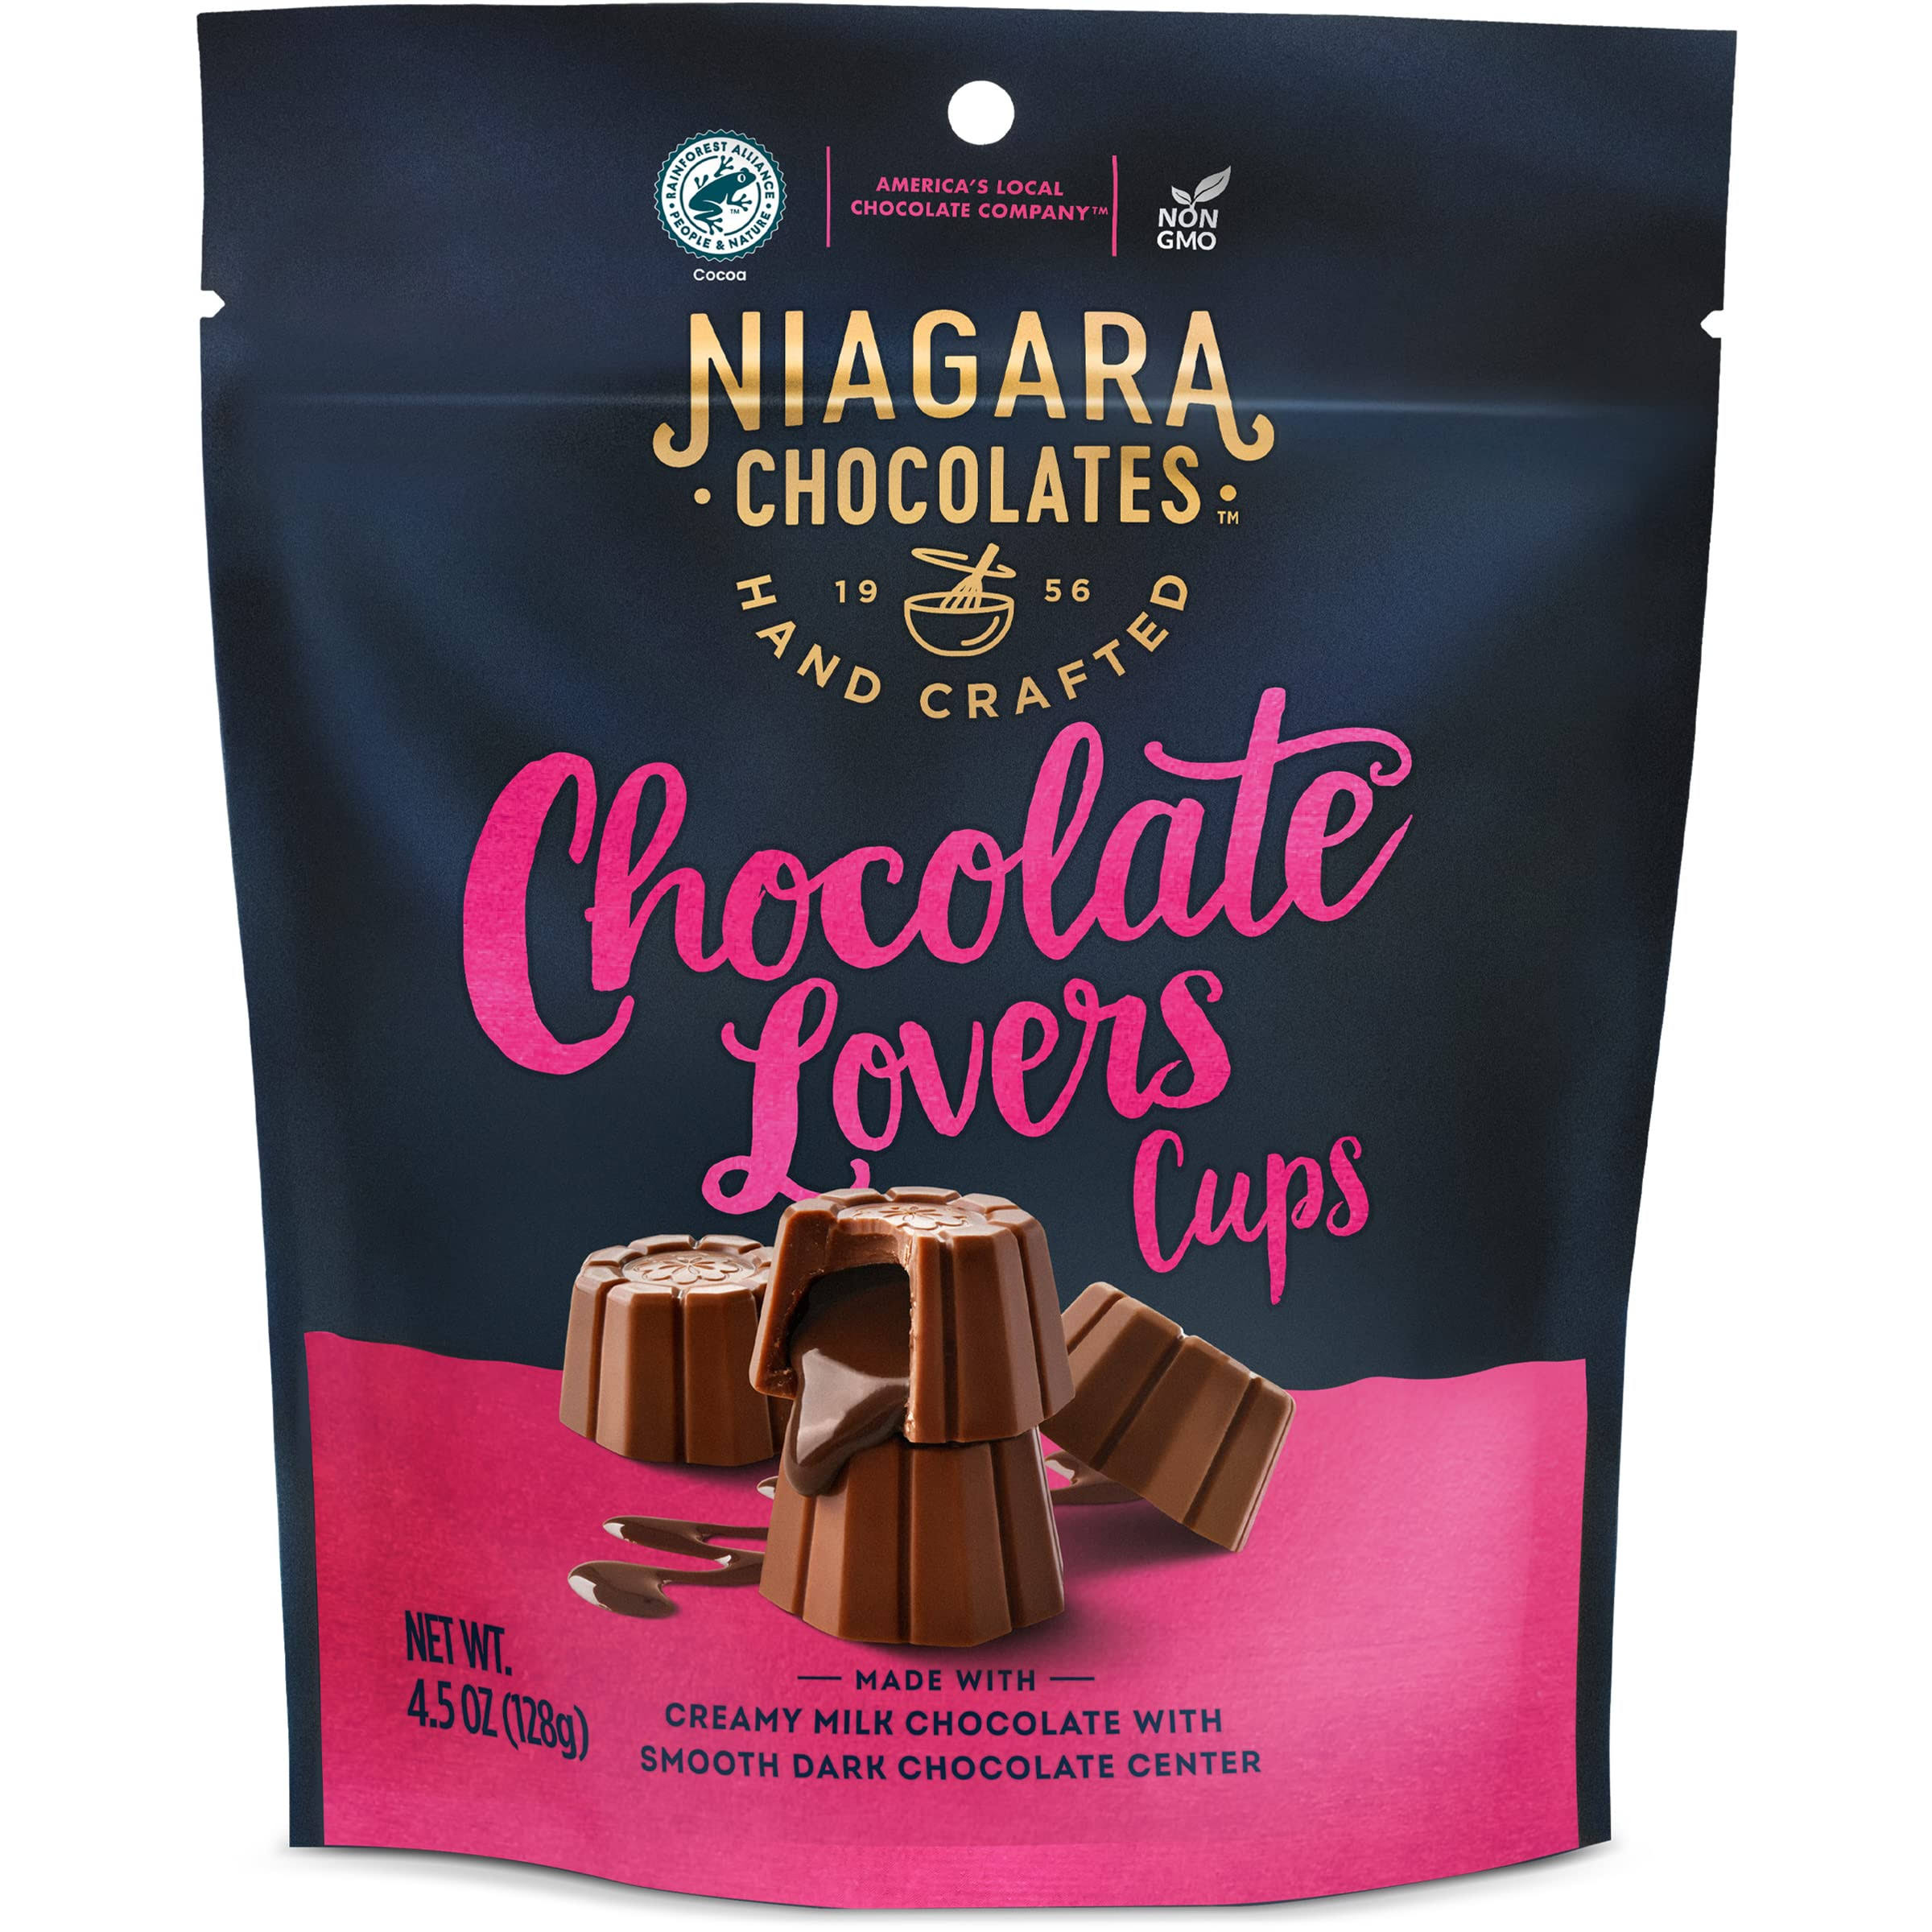 Niagara Chocolates Cups, Chocolate Lovers - 4.5 oz